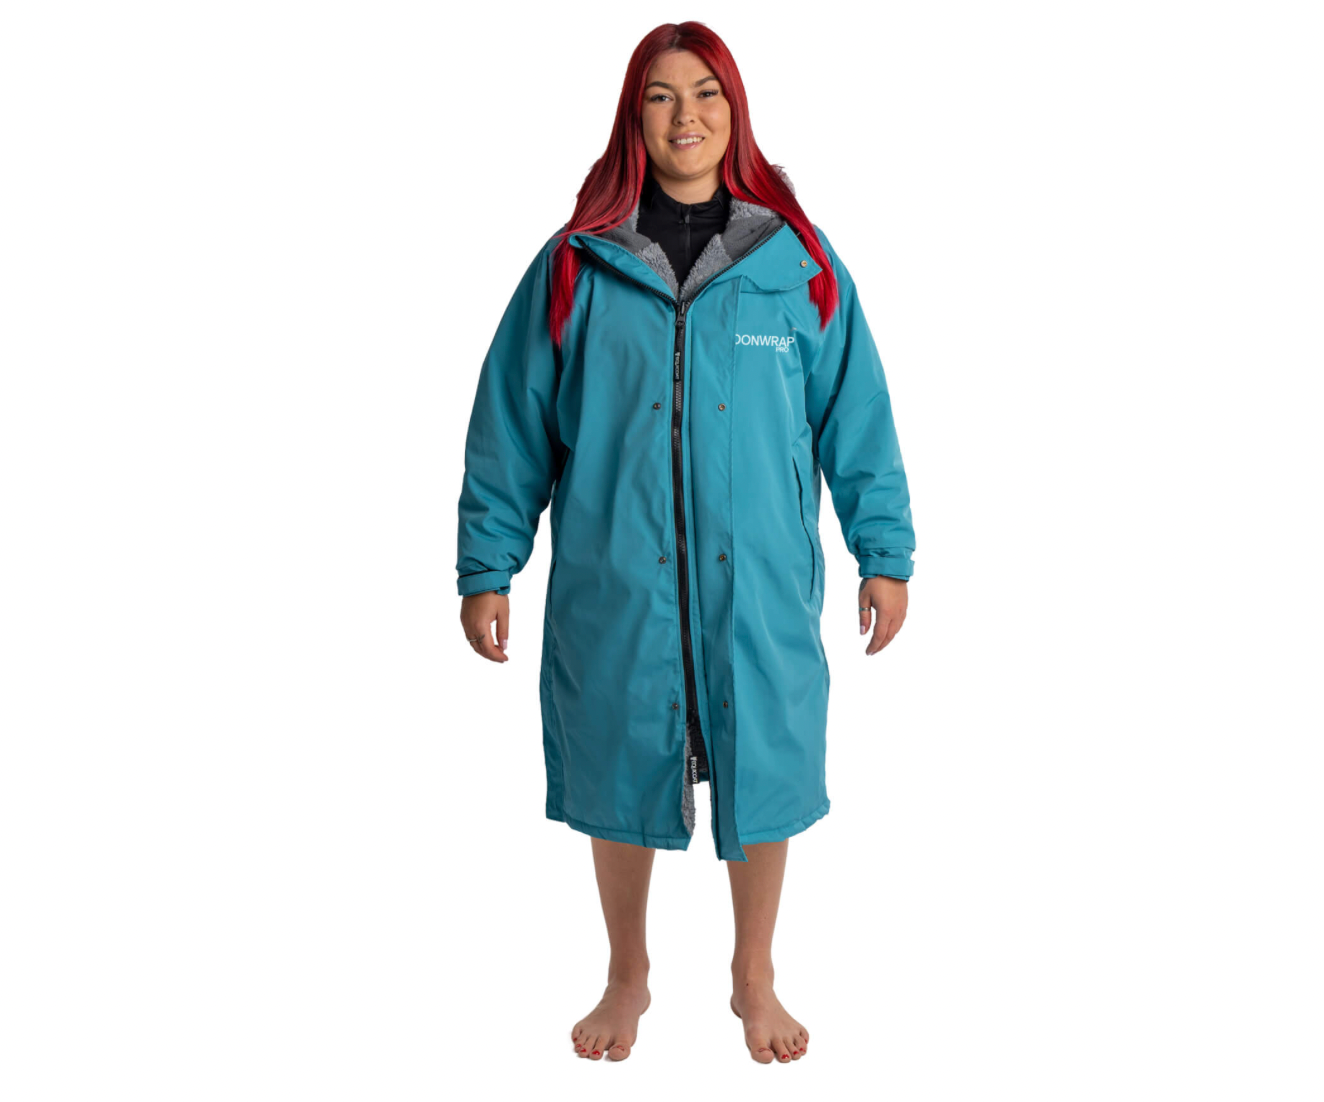 Frostfire - Moonwrap Pro Long Sleeve Waterproof Changing Robe Teal